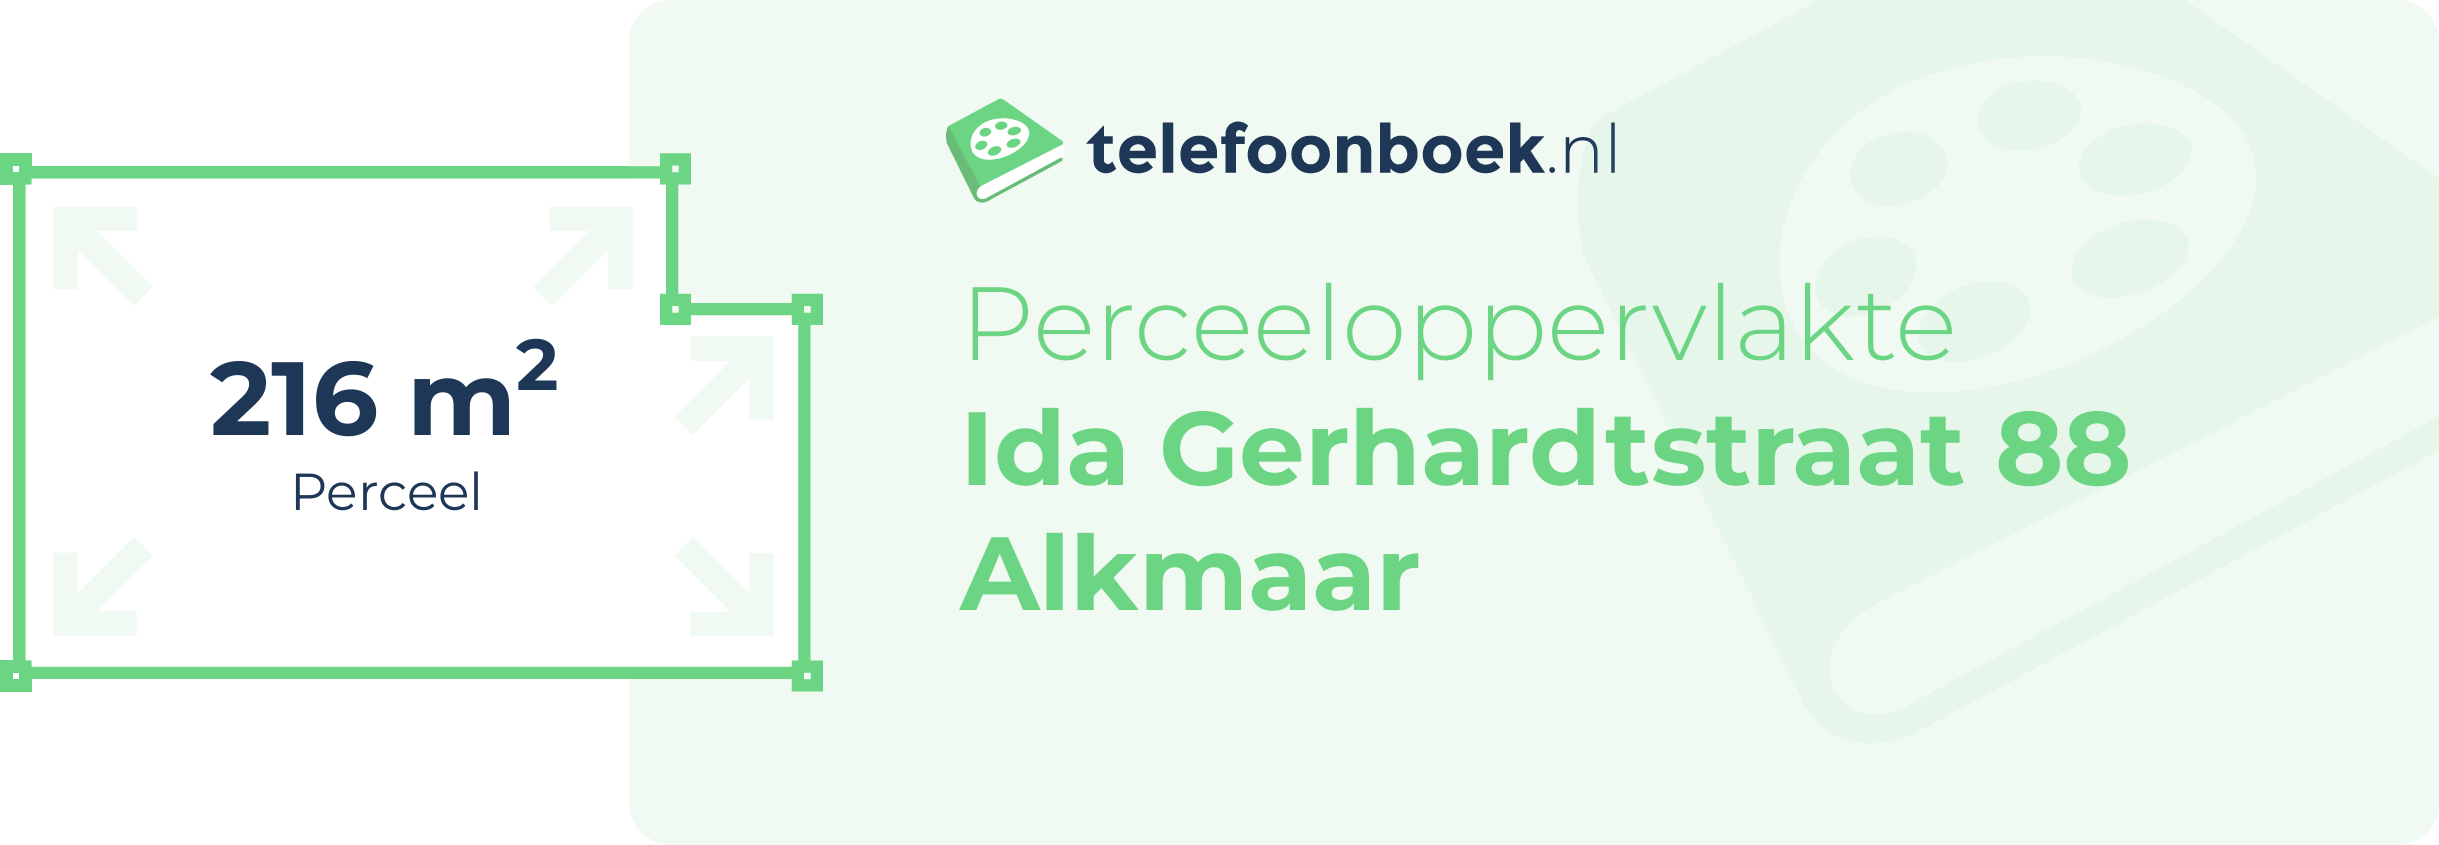 Perceeloppervlakte Ida Gerhardtstraat 88 Alkmaar